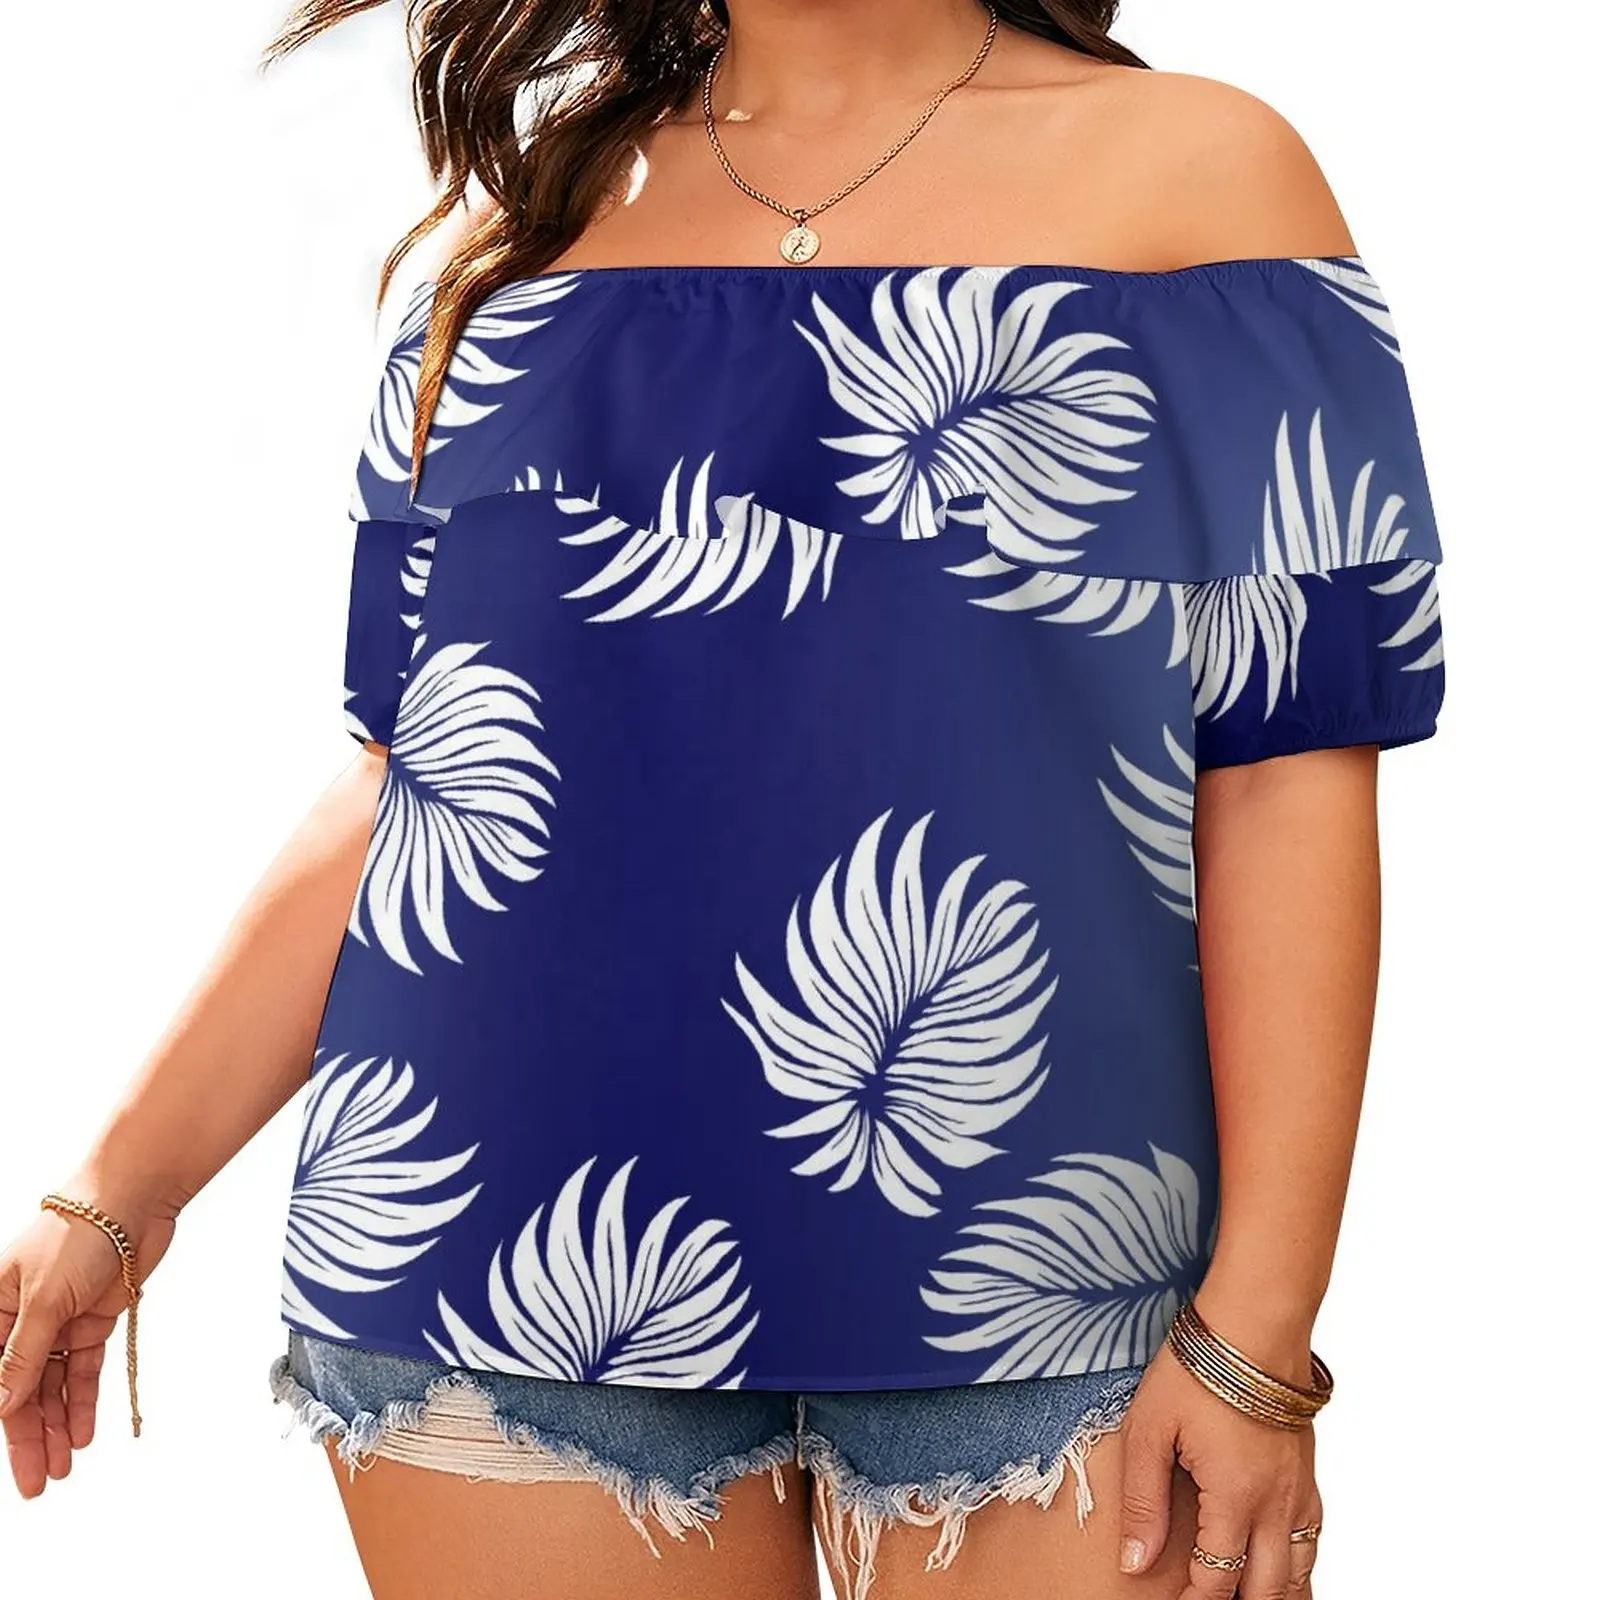 wholesale high quality chiffon shirt women plus size ruffle puff sleeves tops hawaiian monstera leaf navy blue chiffon blouse